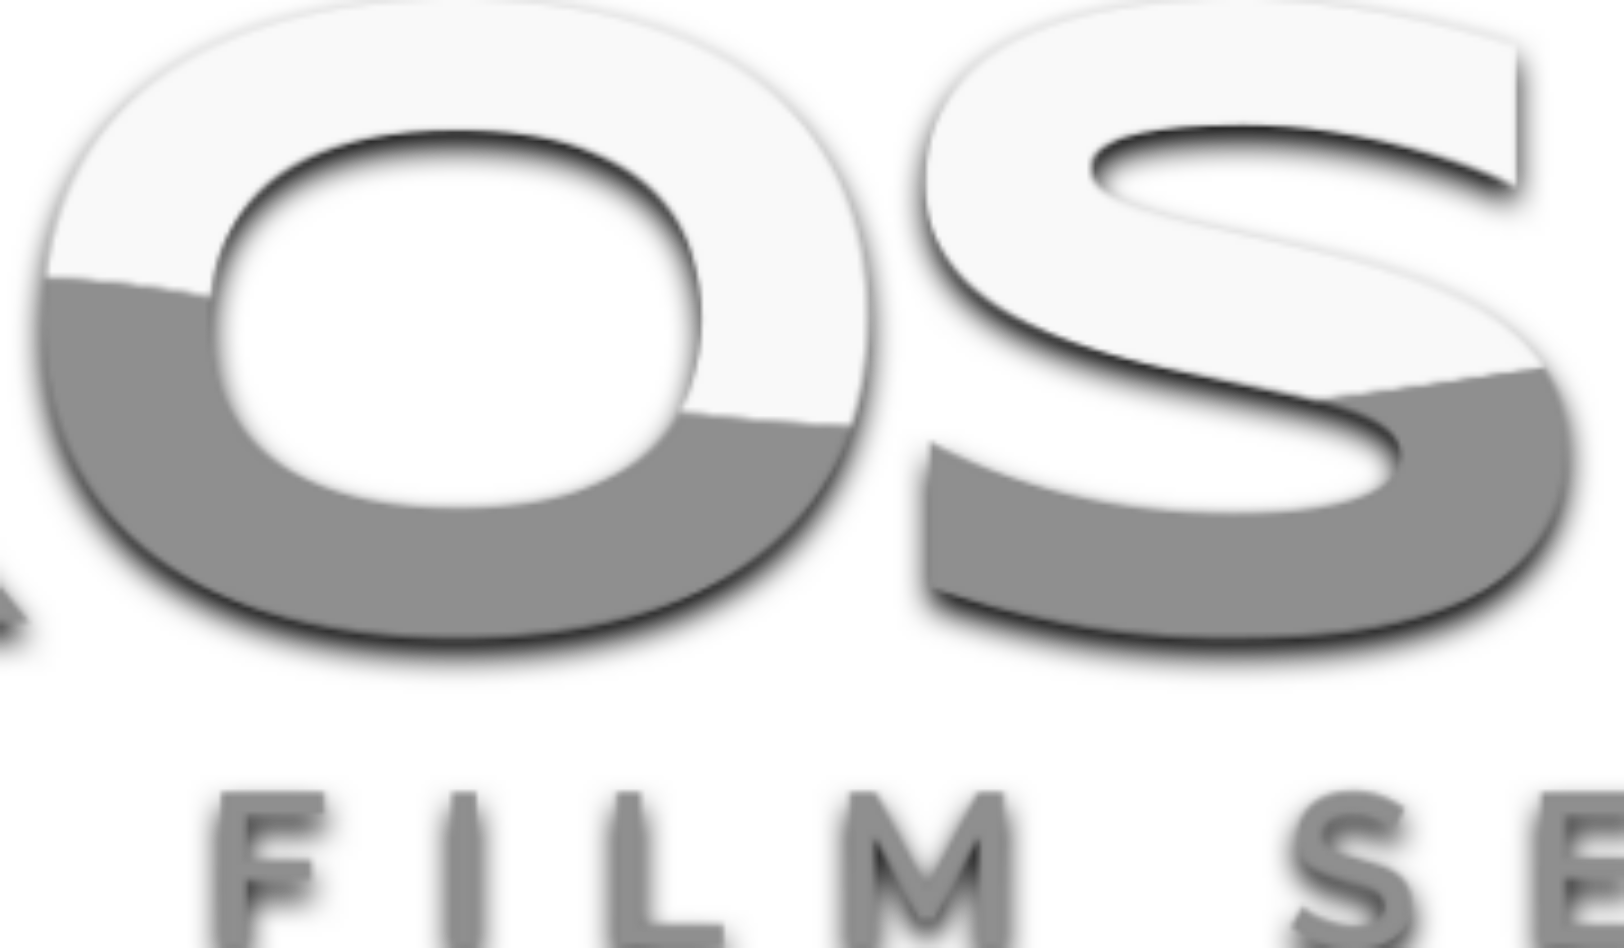 Crosby Marine Film Services